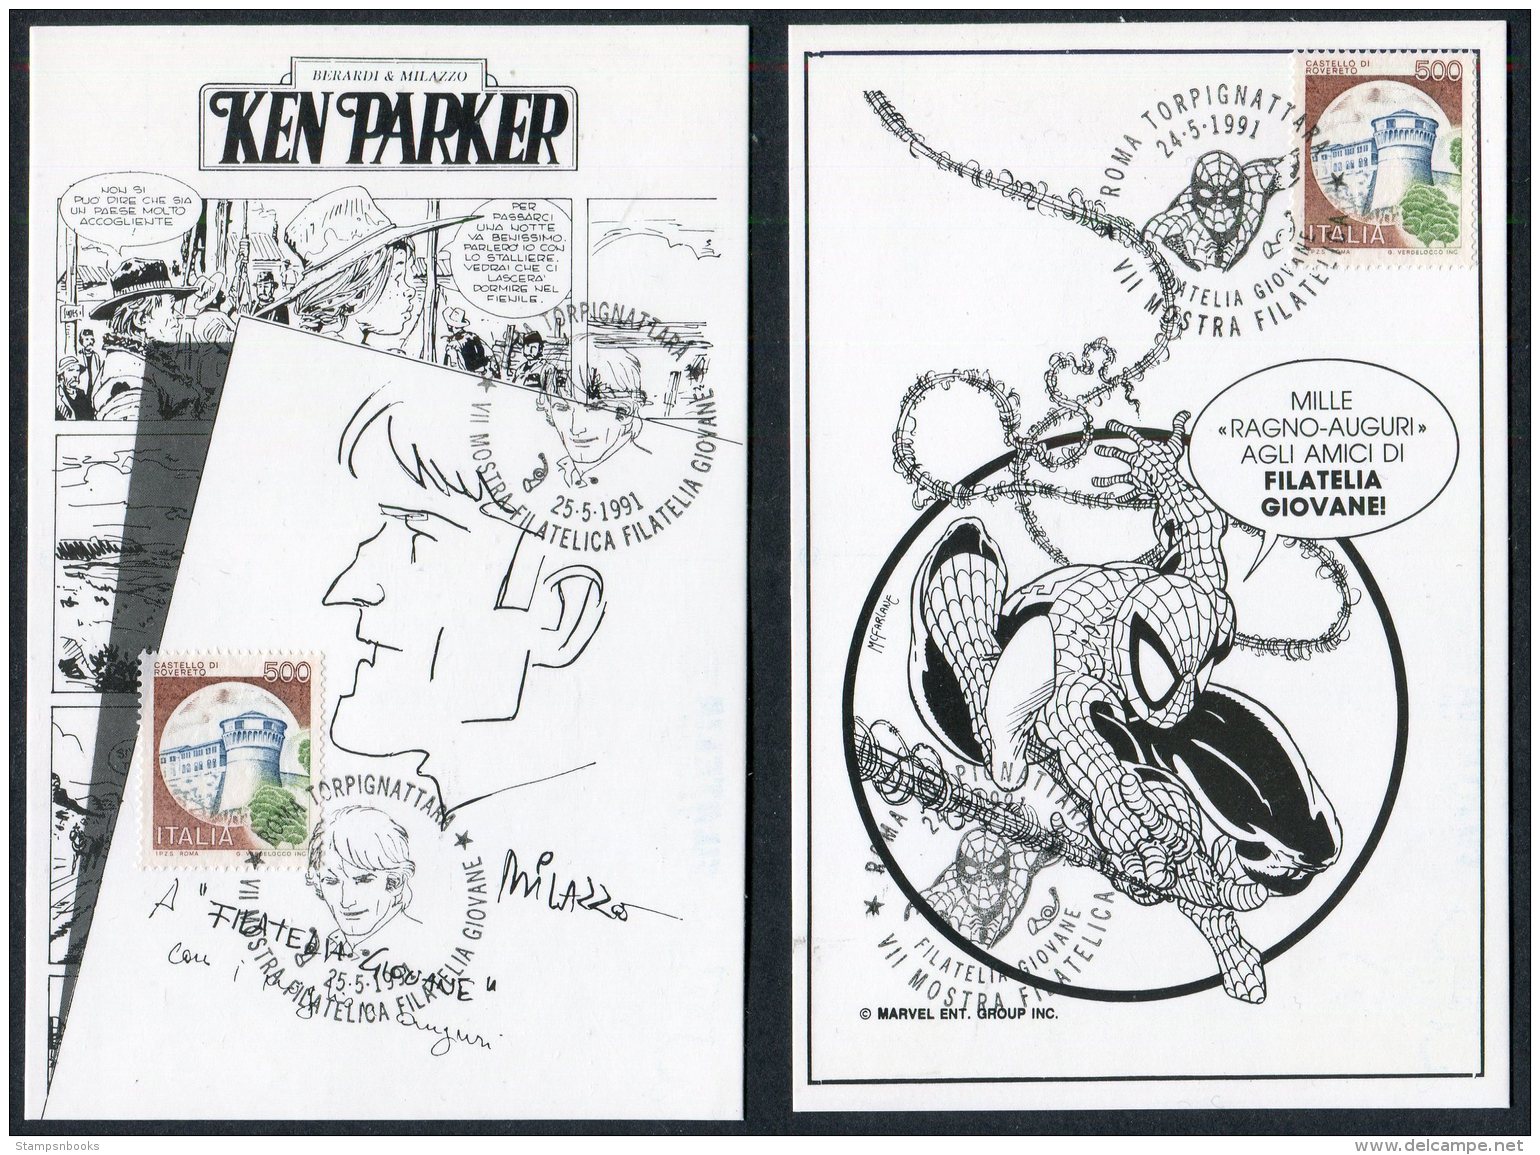 1991 Italy 6 X Roma Mostra Filatelica Cartoon Filatelia Giovane Postcards Corto Maltese, Tex Cowboy,Spiderman,Ken Parker - Fumetti